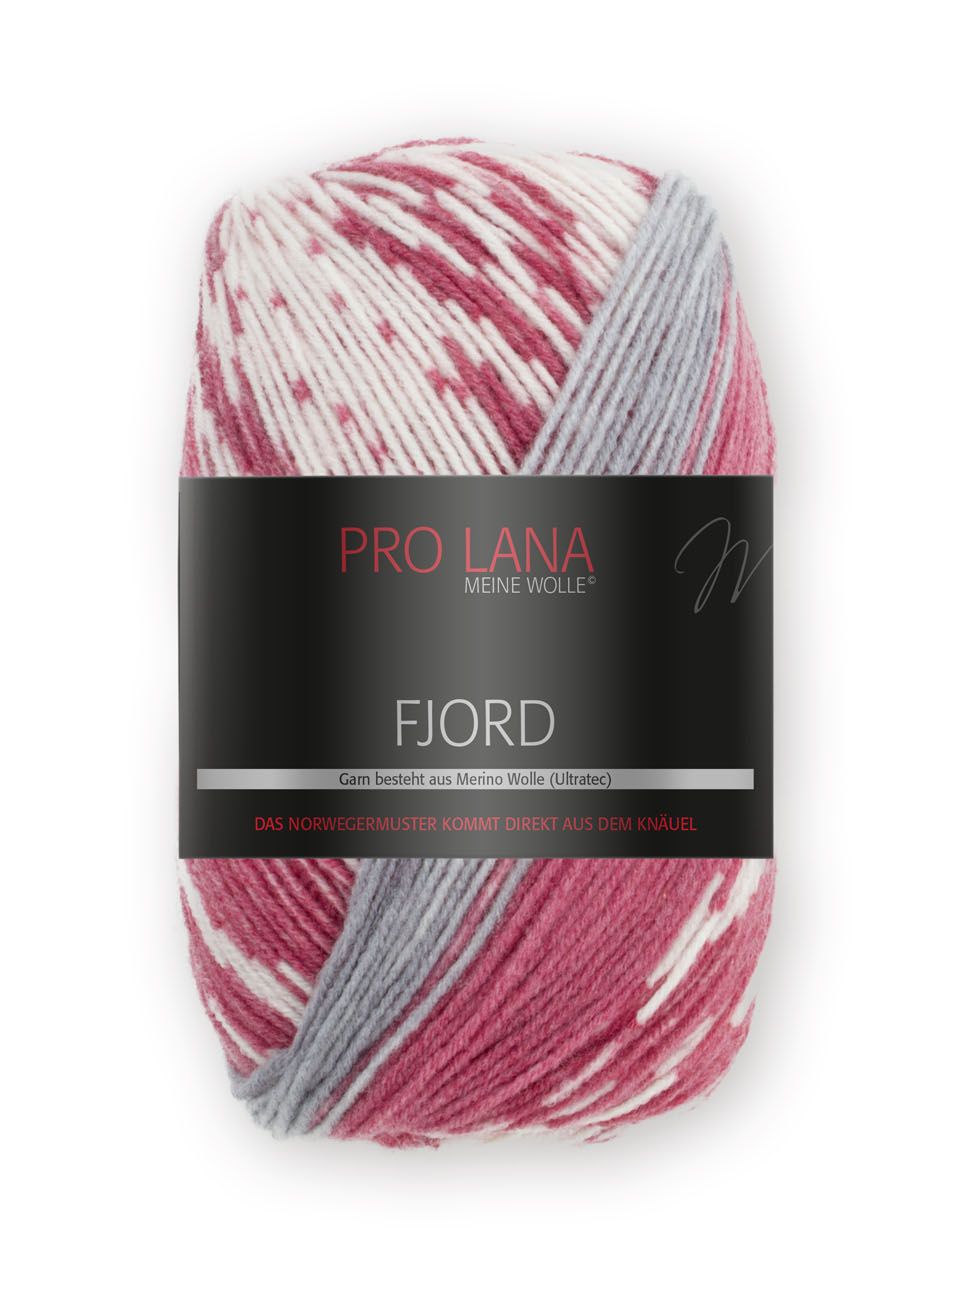 Pro Lana Fjord 100g - Rot / Grau / Weiß 83